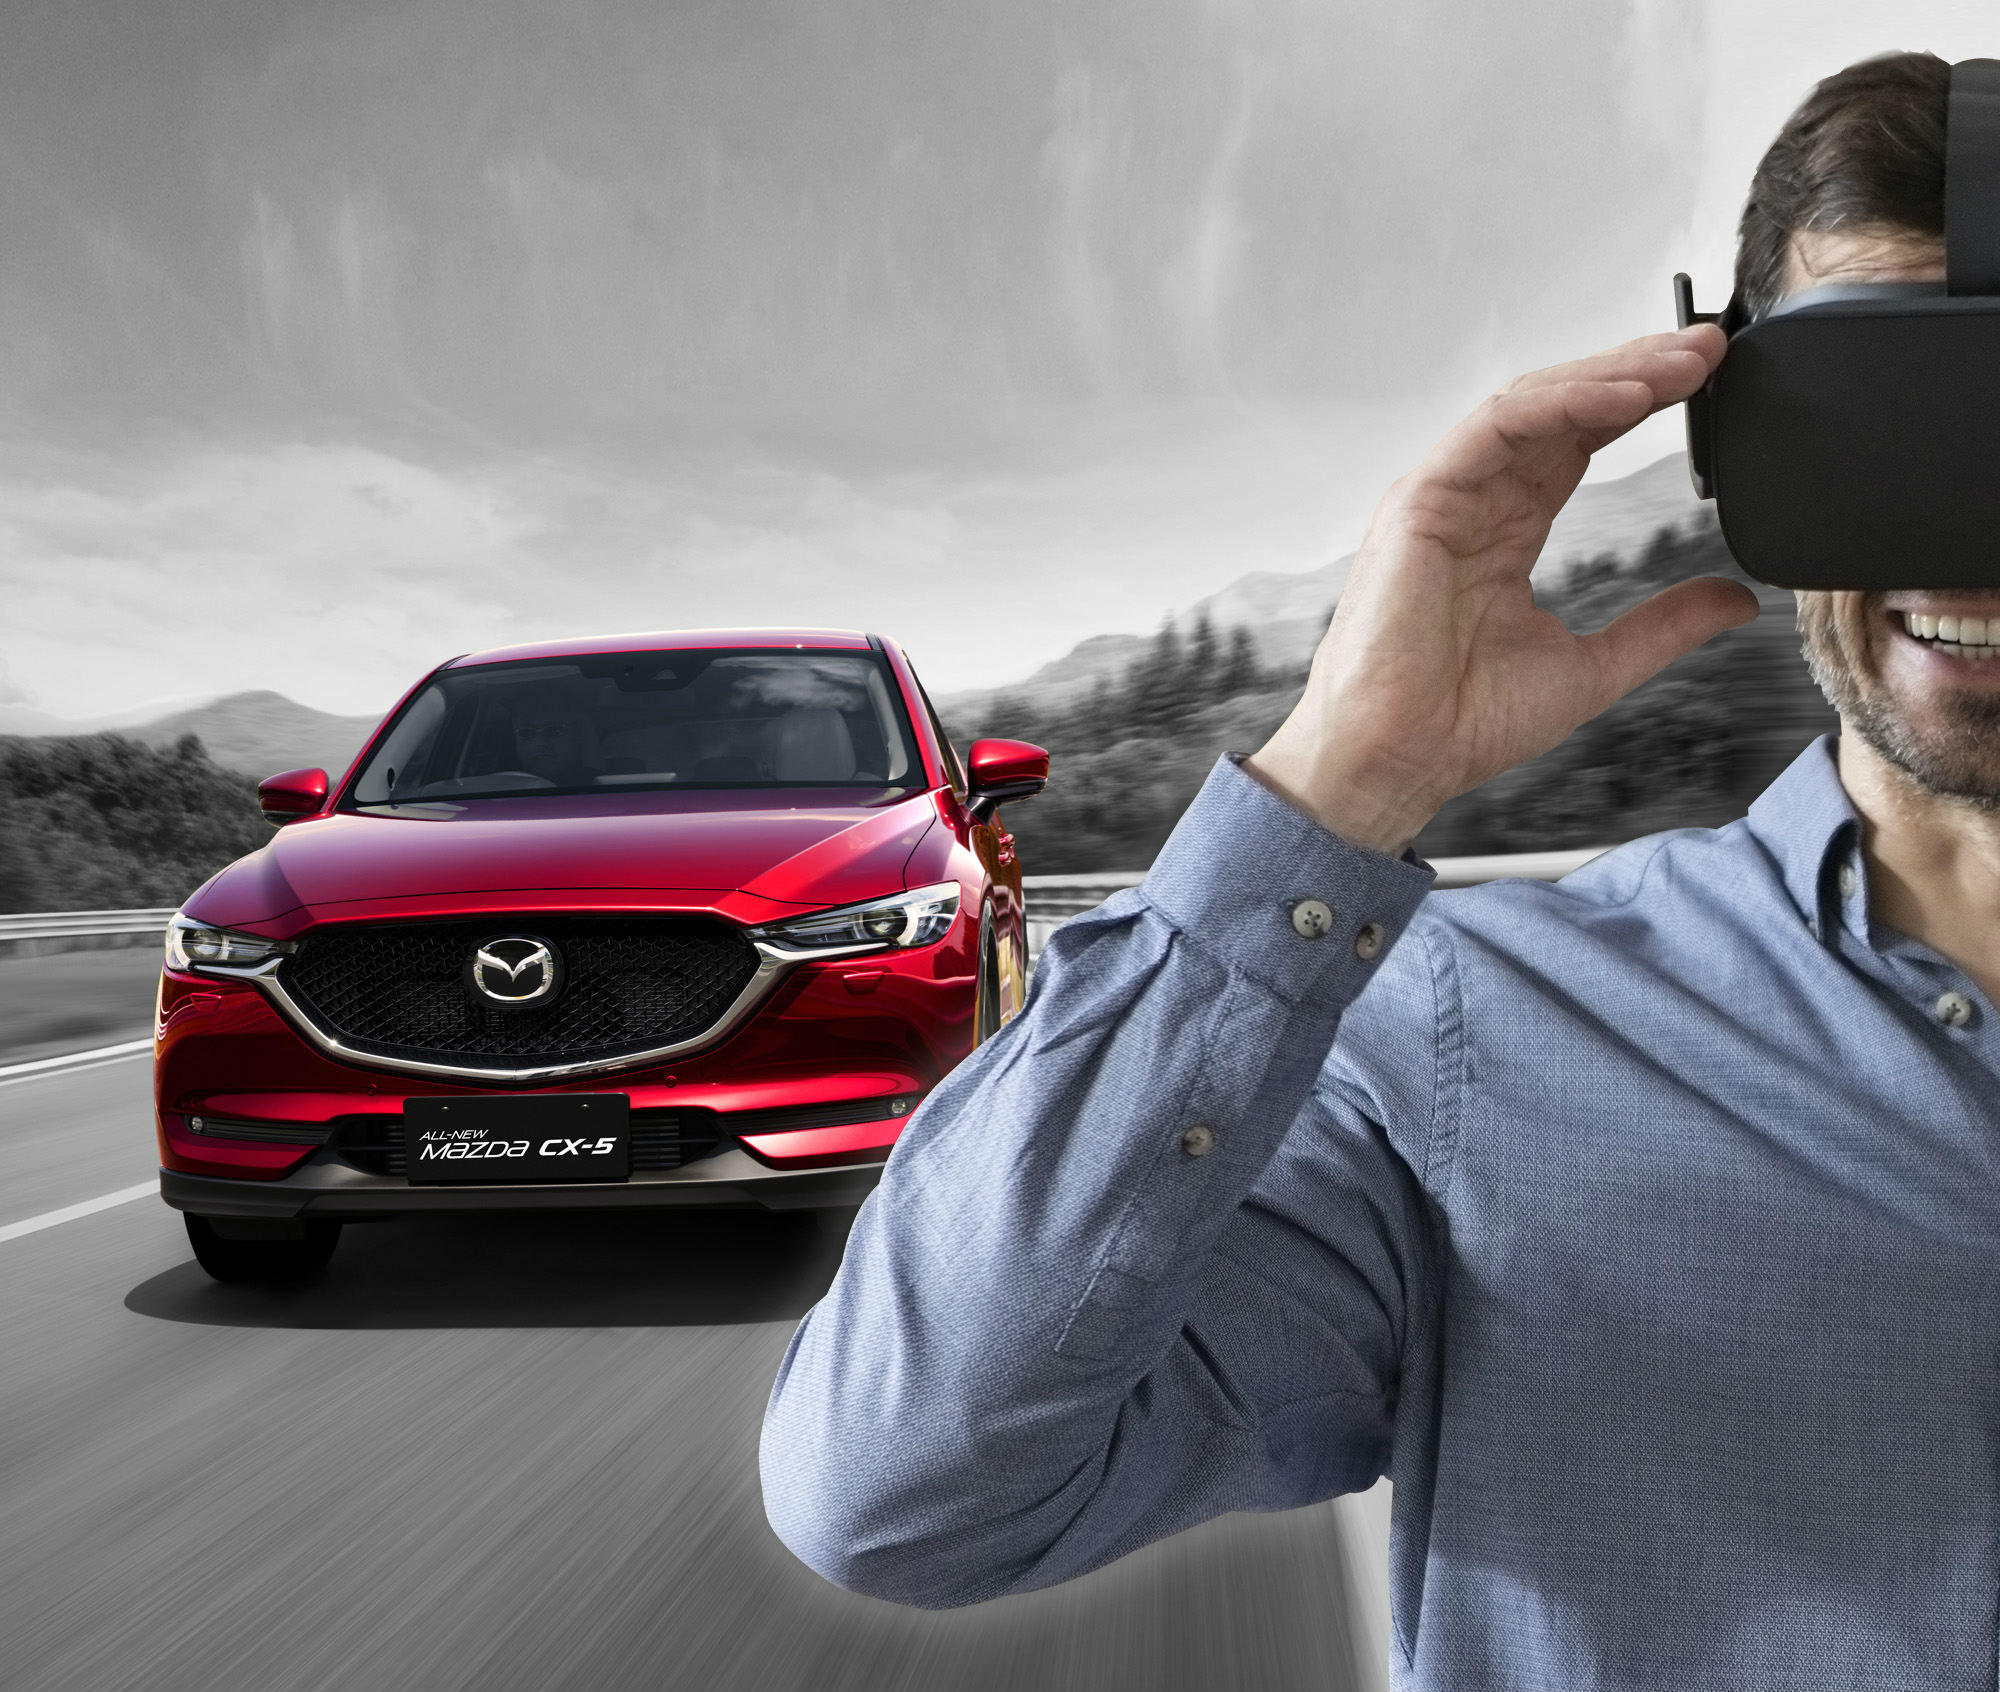 Test drive a Mazda CX-5 using virtual reality